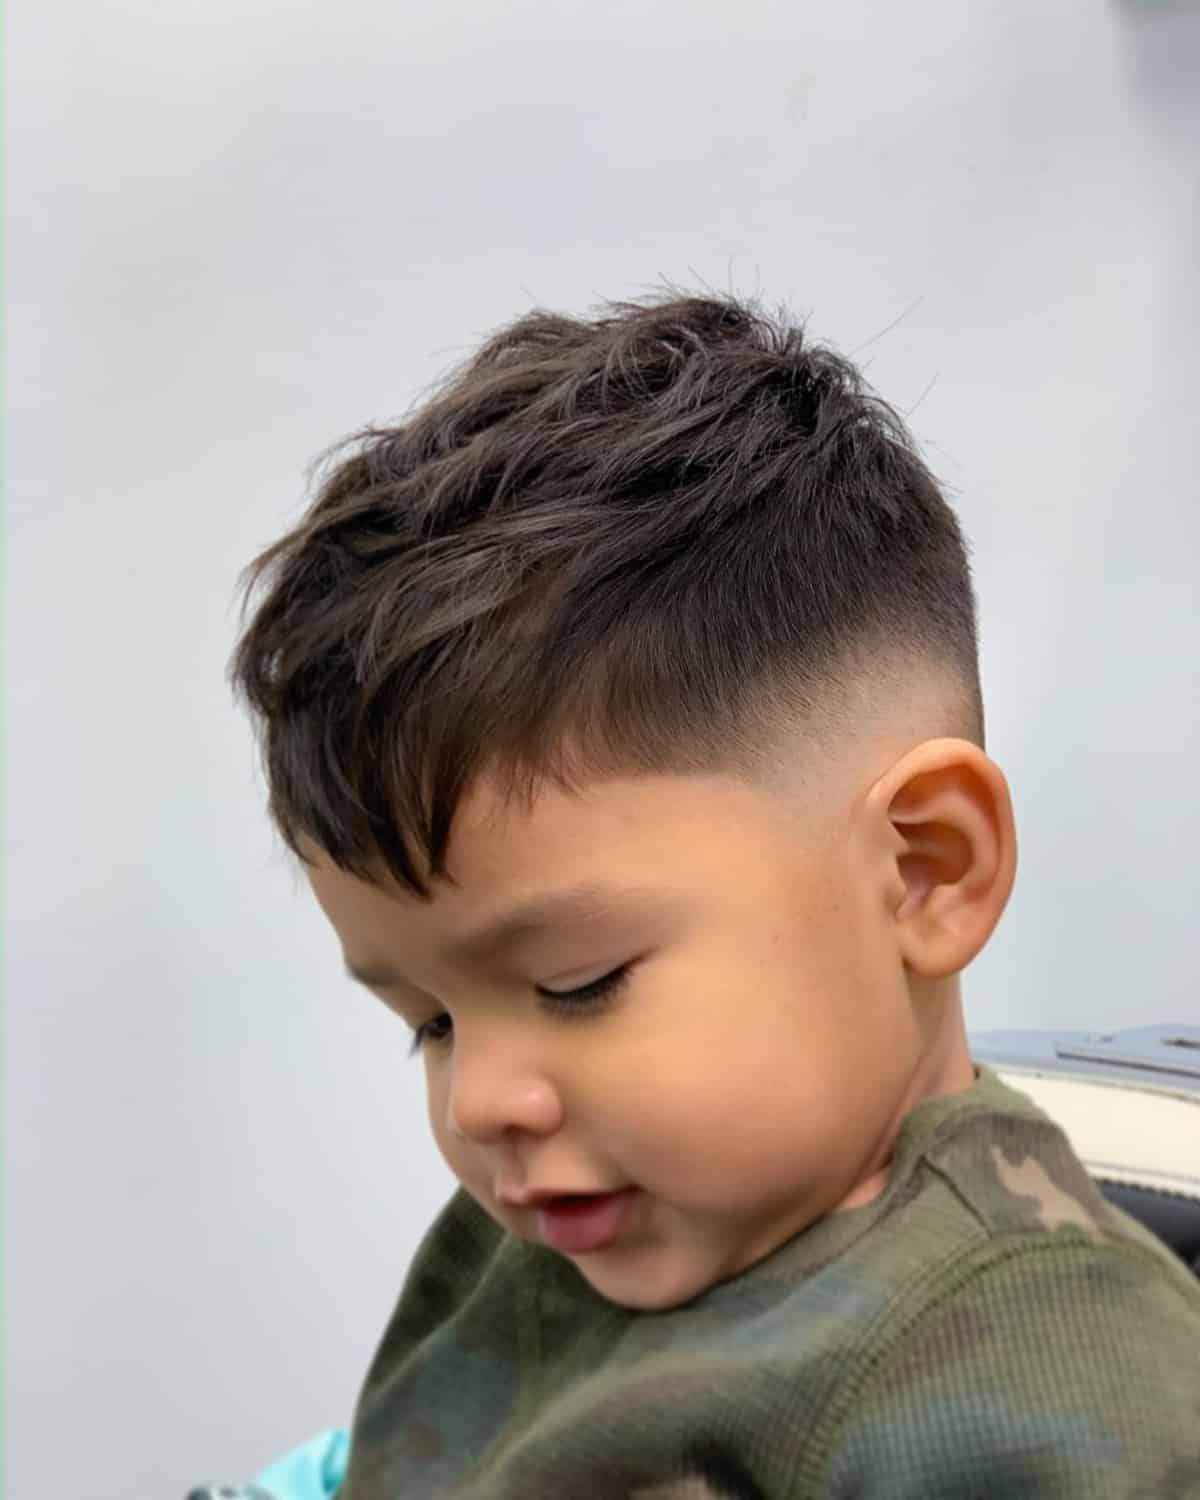 EASY HOME HAIRCUT TUTORIAL | KIDS KOREA HAIR STYLE | 家长自己帮孩子剪头发 | EASY USE  CLIPPER HAIR CUT BOYS - YouTube